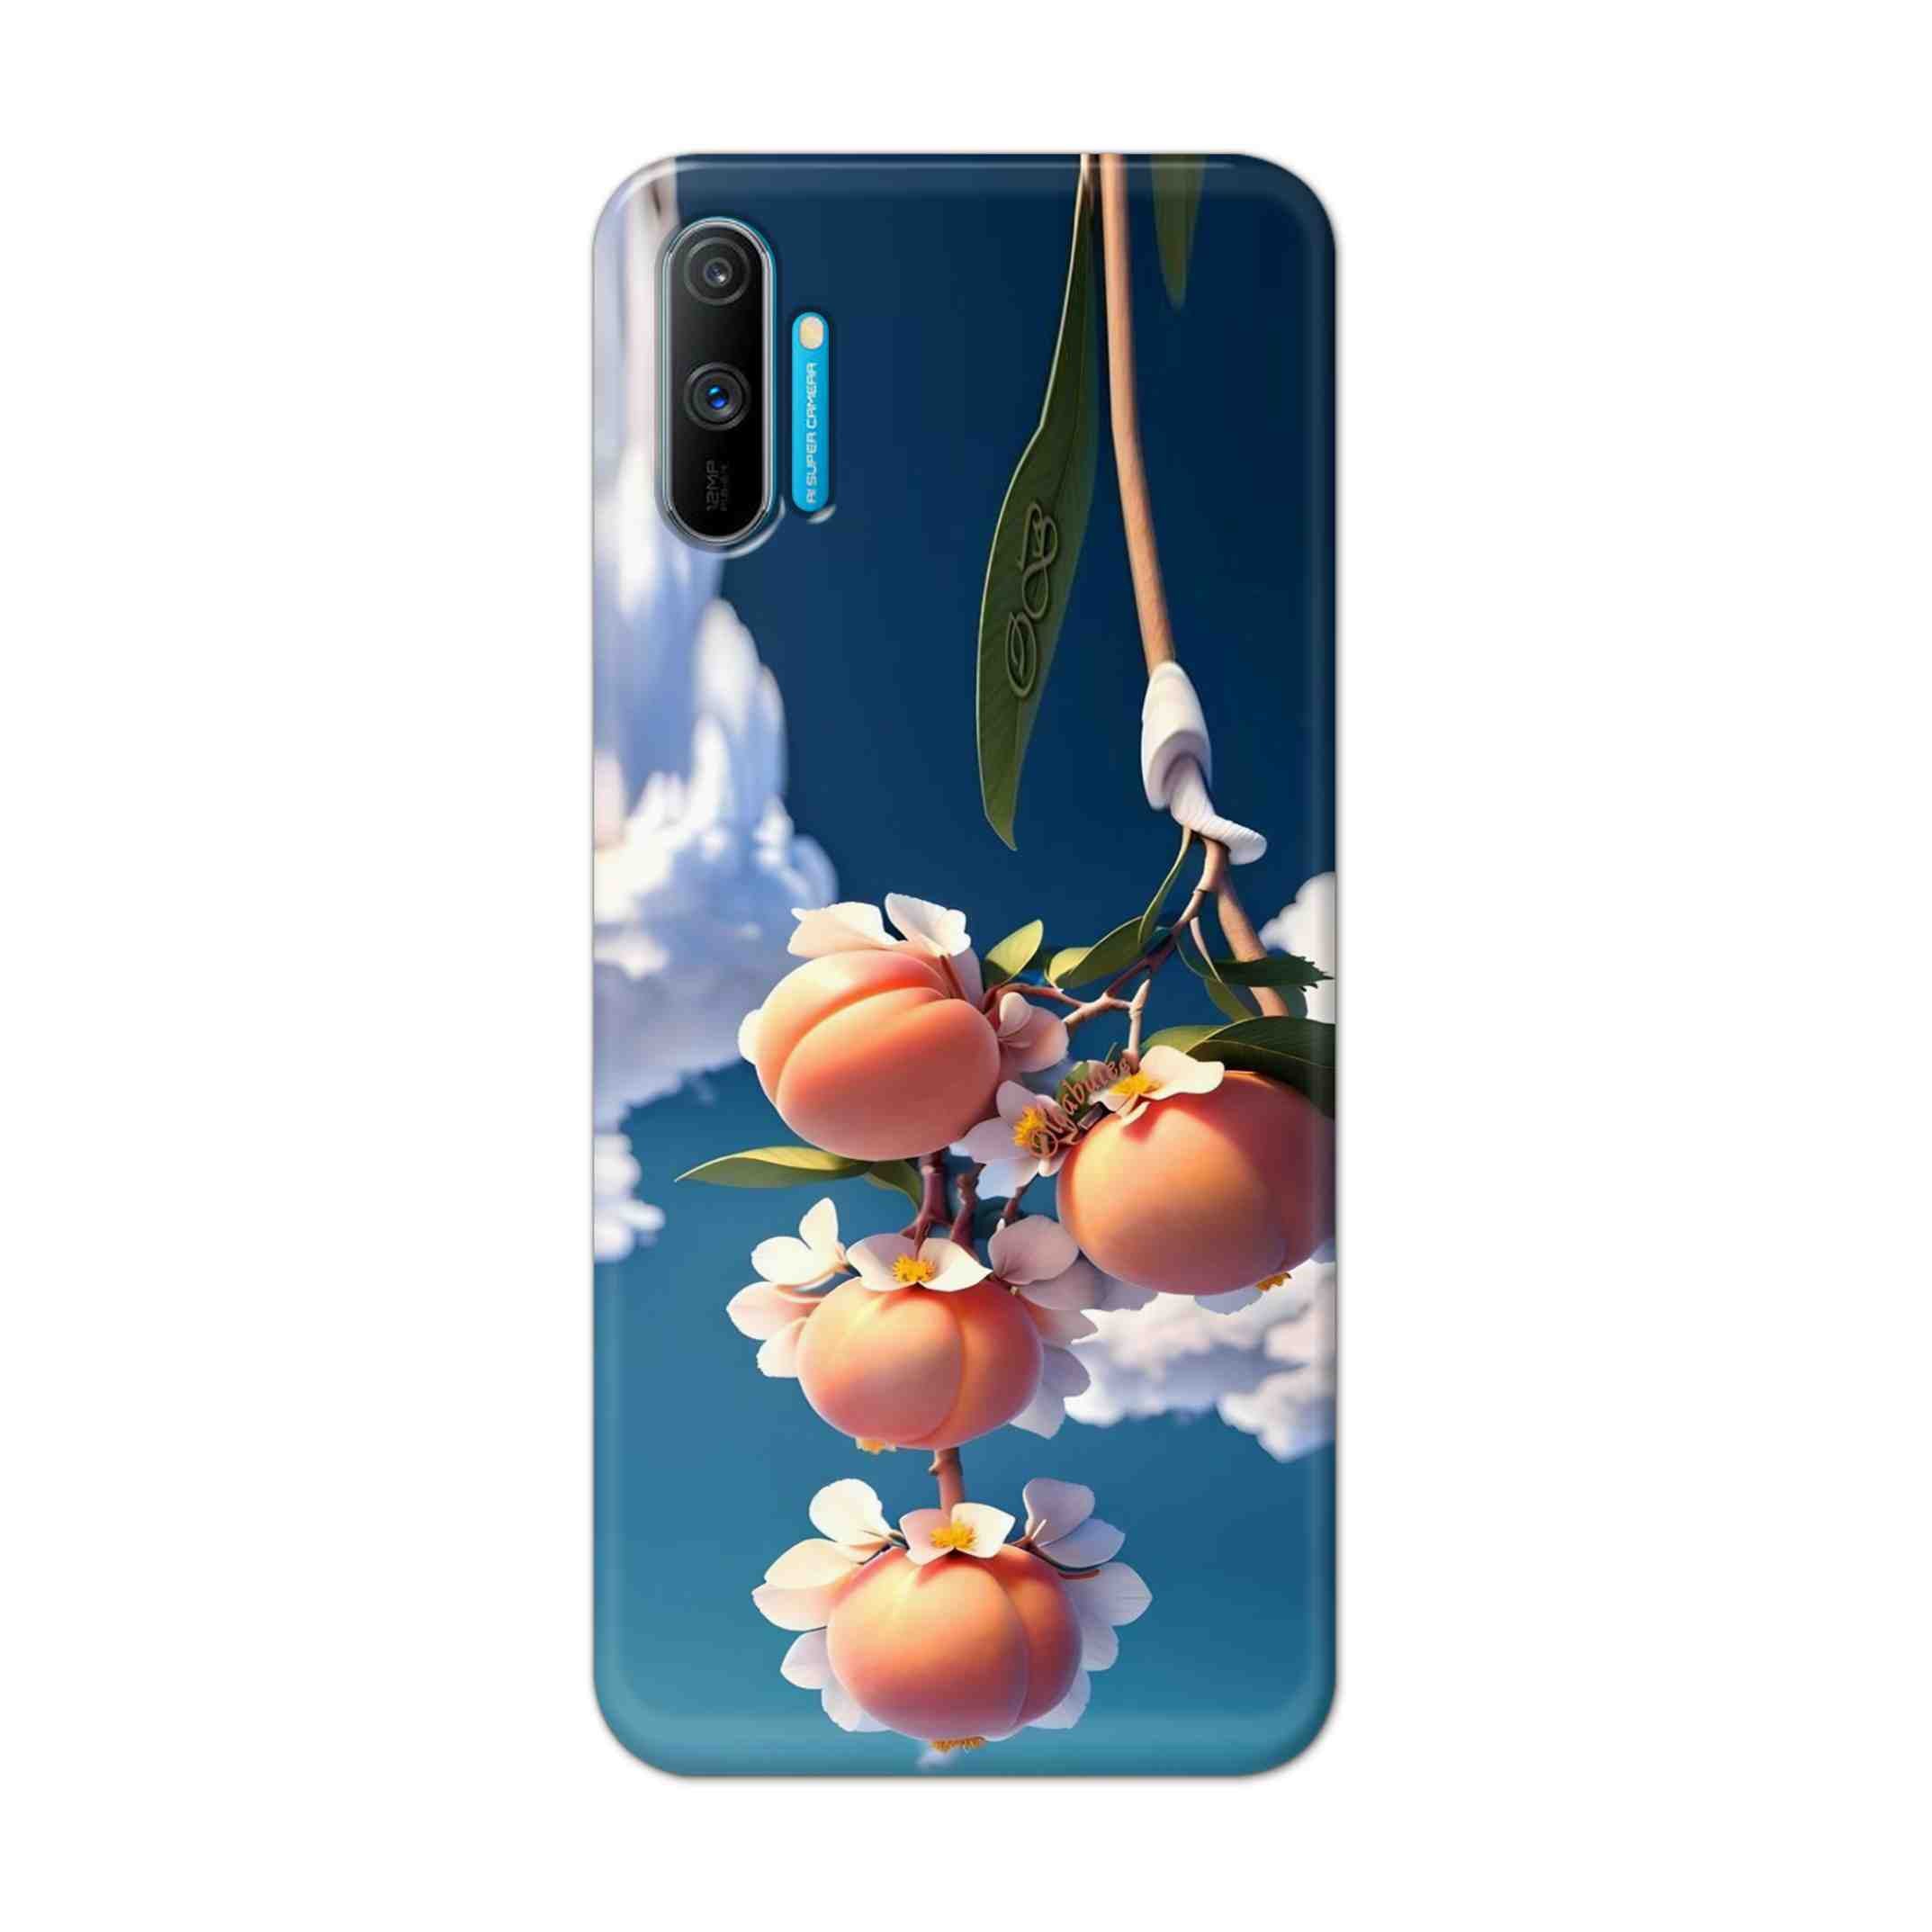 Buy Fruit Hard Back Mobile Phone Case Cover For Realme C3 Online